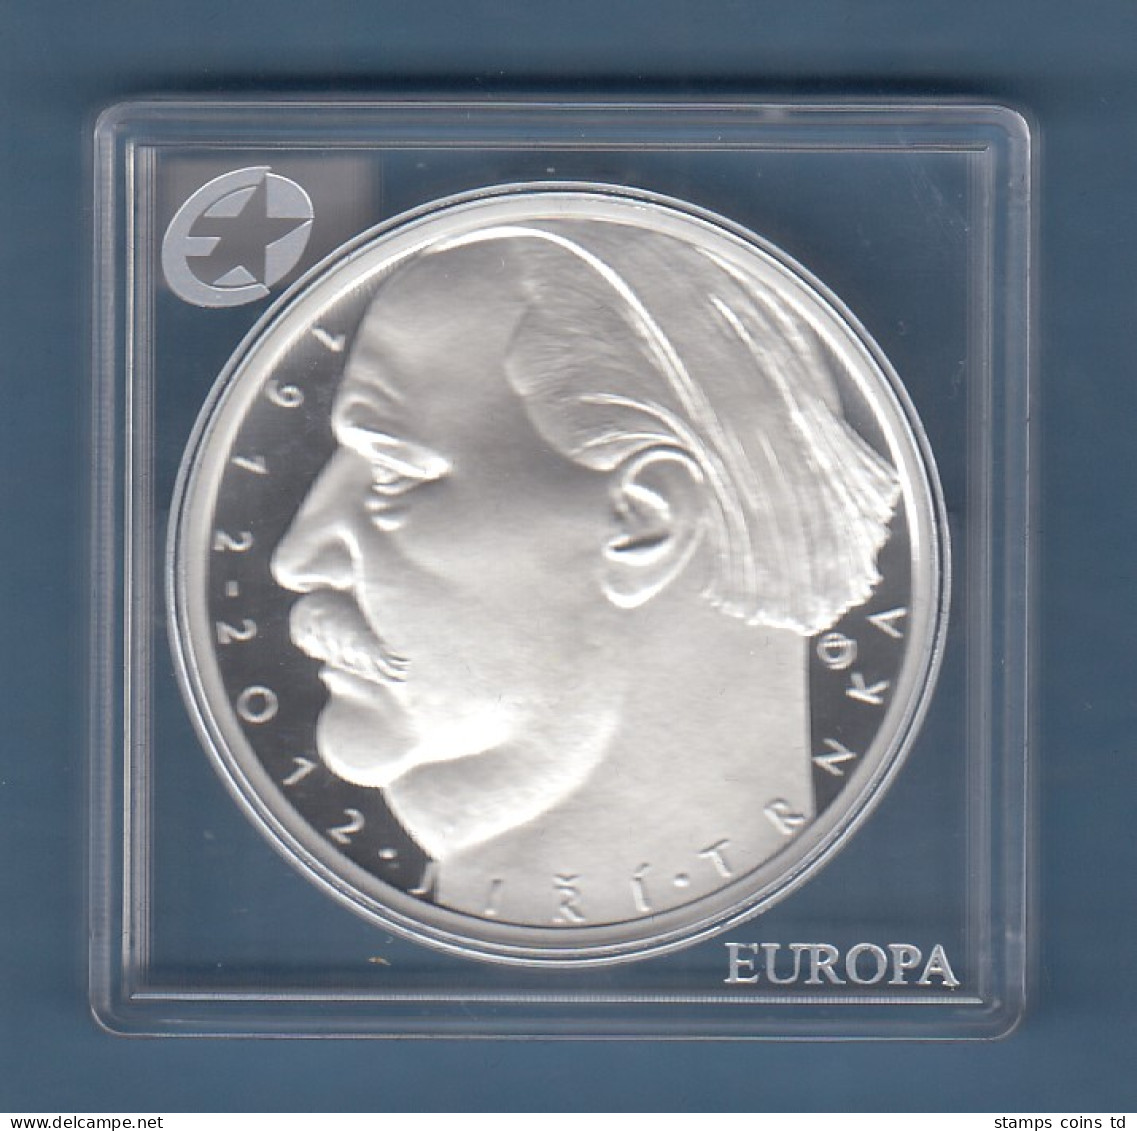 Tschechische Republik 2012 Jiri Trnka 500Kronen-Silber-Gedenkmünze PP - Repubblica Ceca